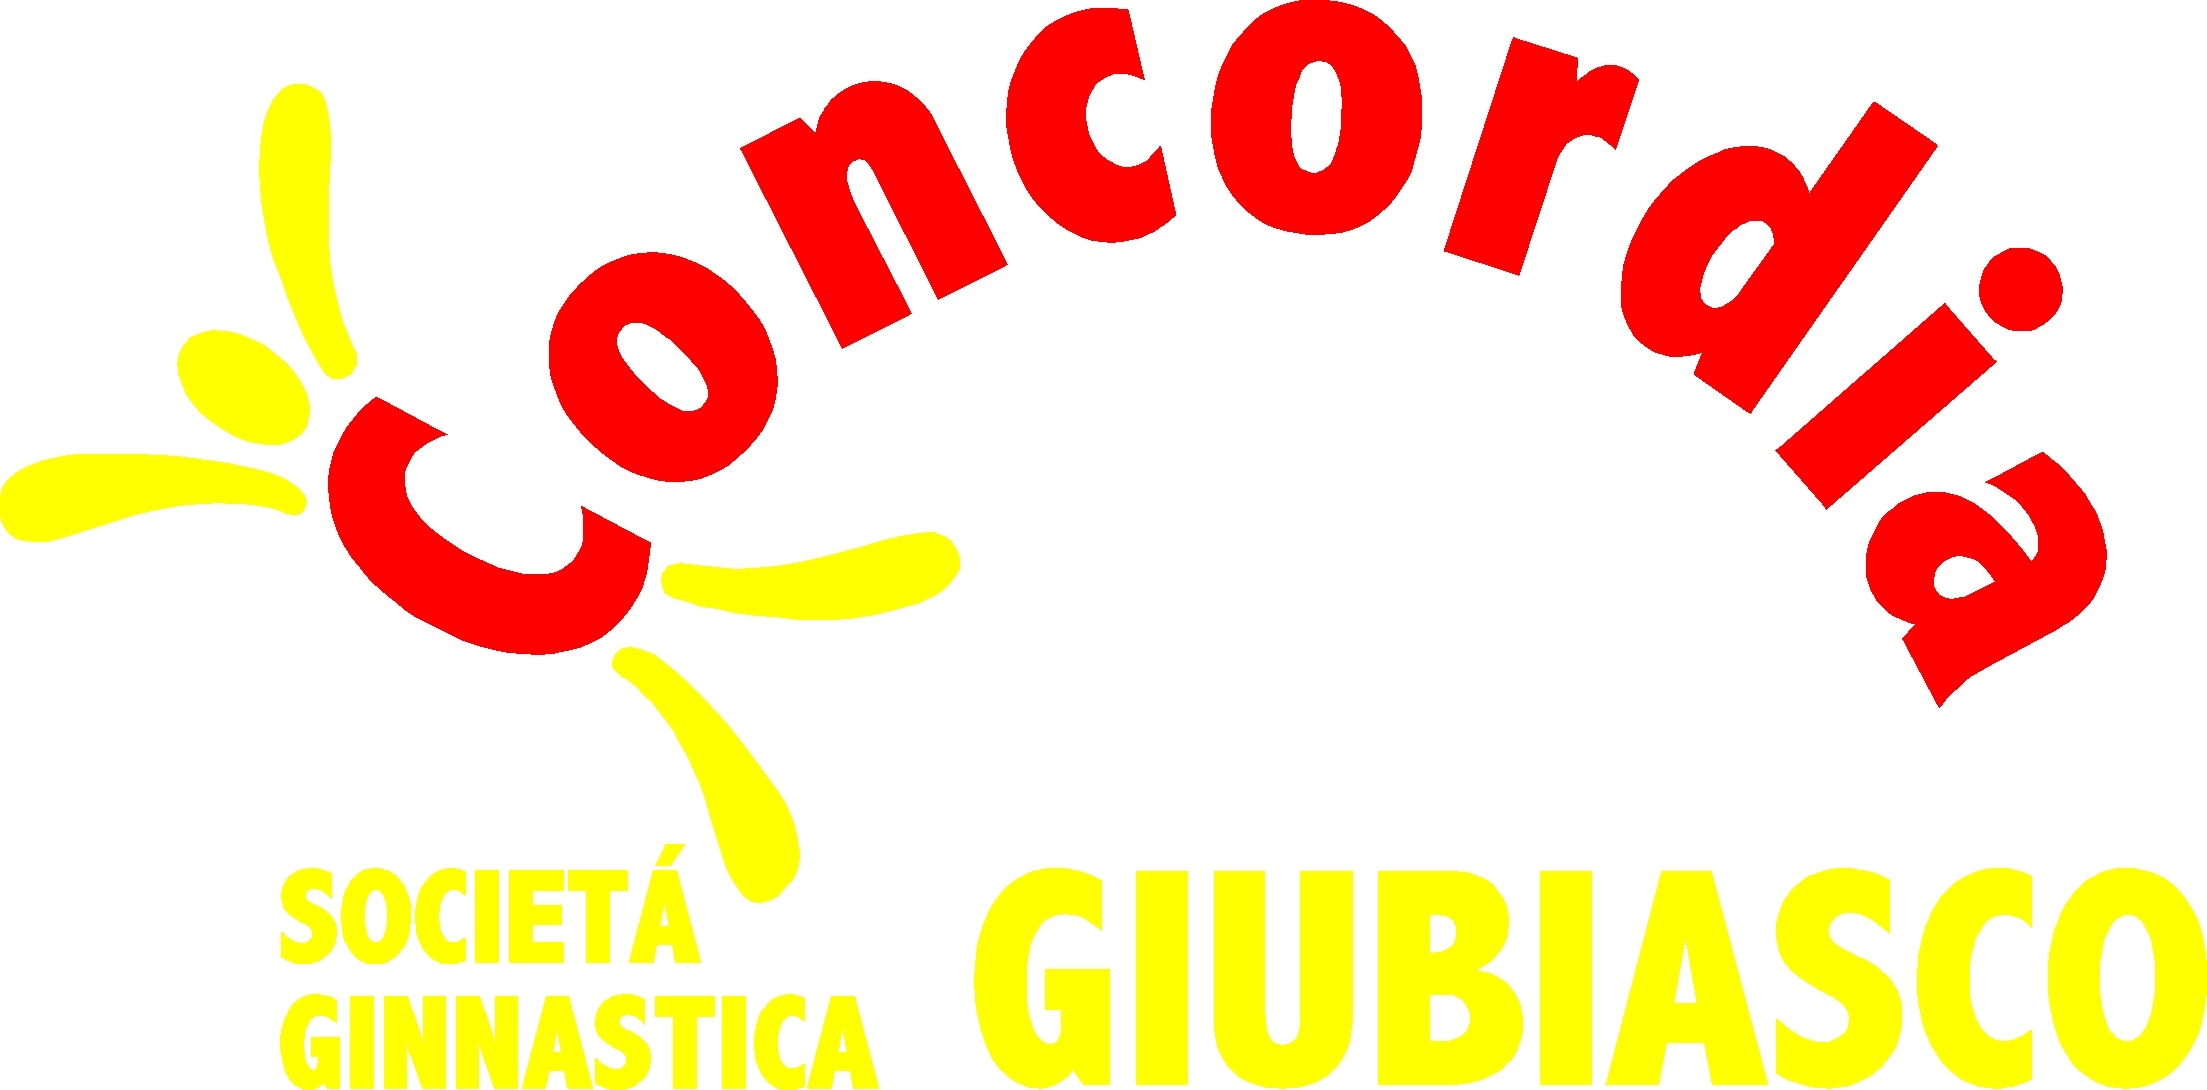 societa-ginnastica-concordia-logo.JPG